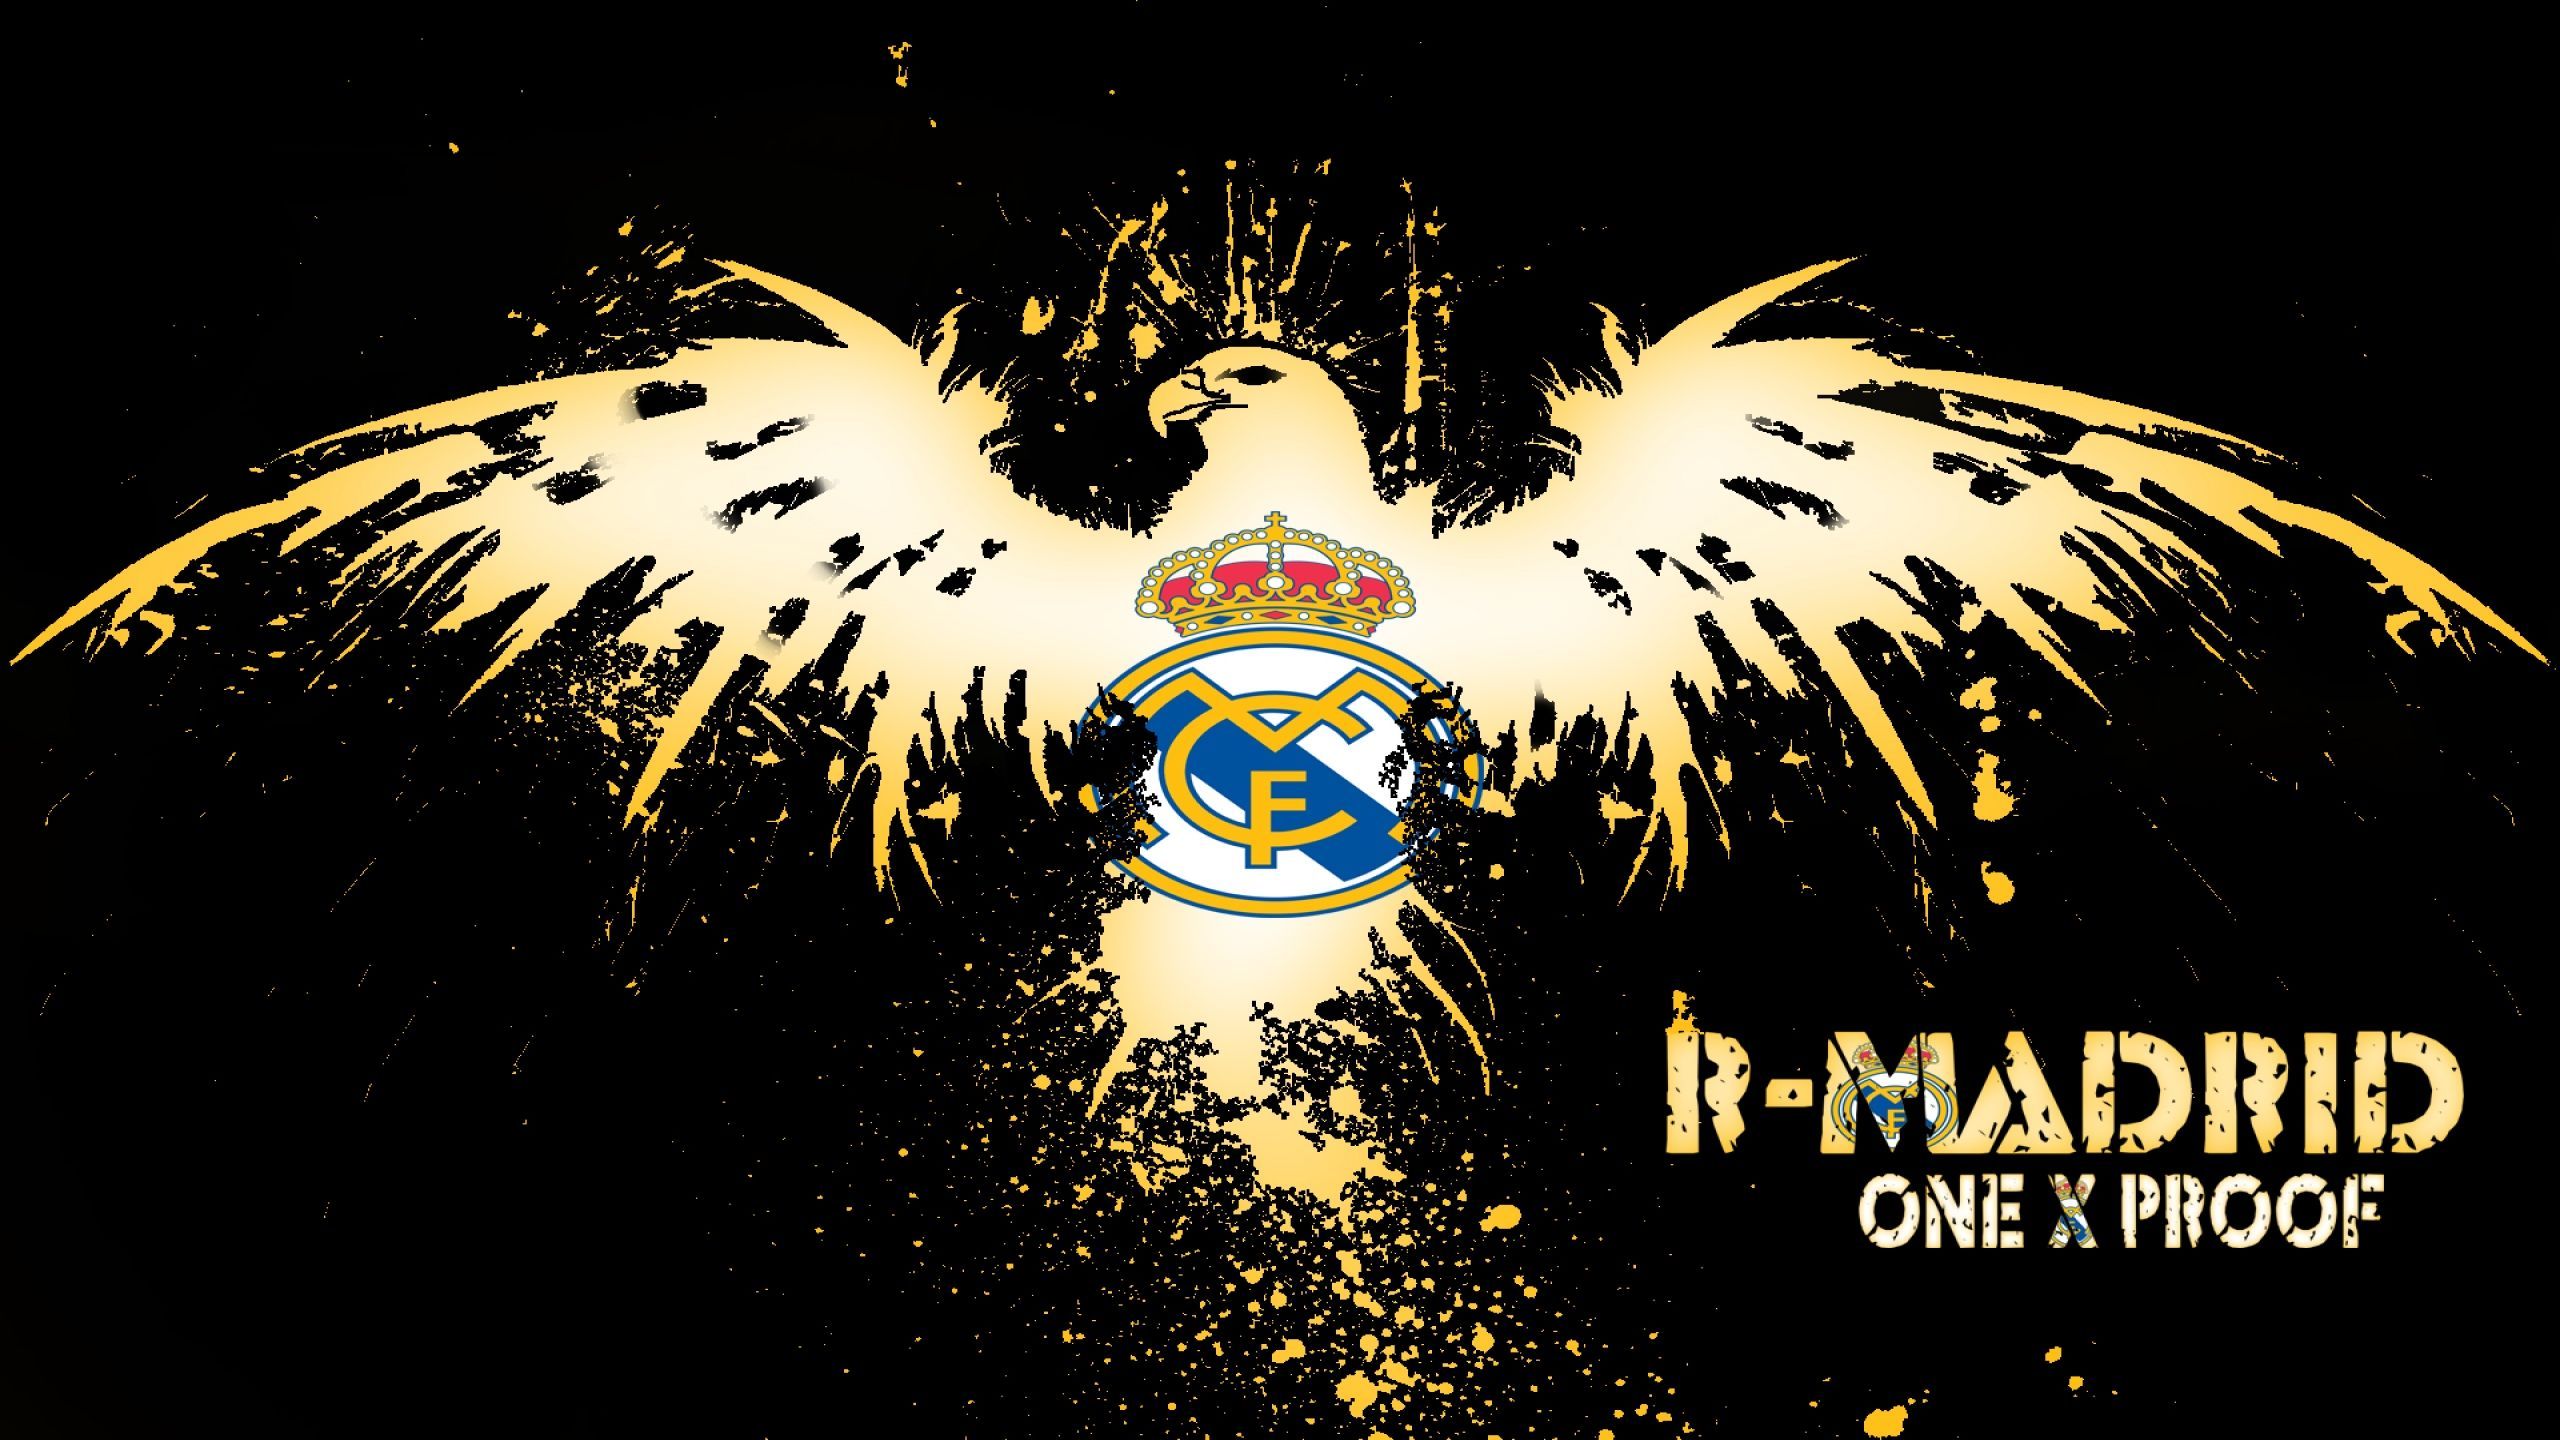 Real Madrid Soccerway Wallpaper HD. Real madrid wallpaper, Real madrid logo, Real madrid logo wallpaper